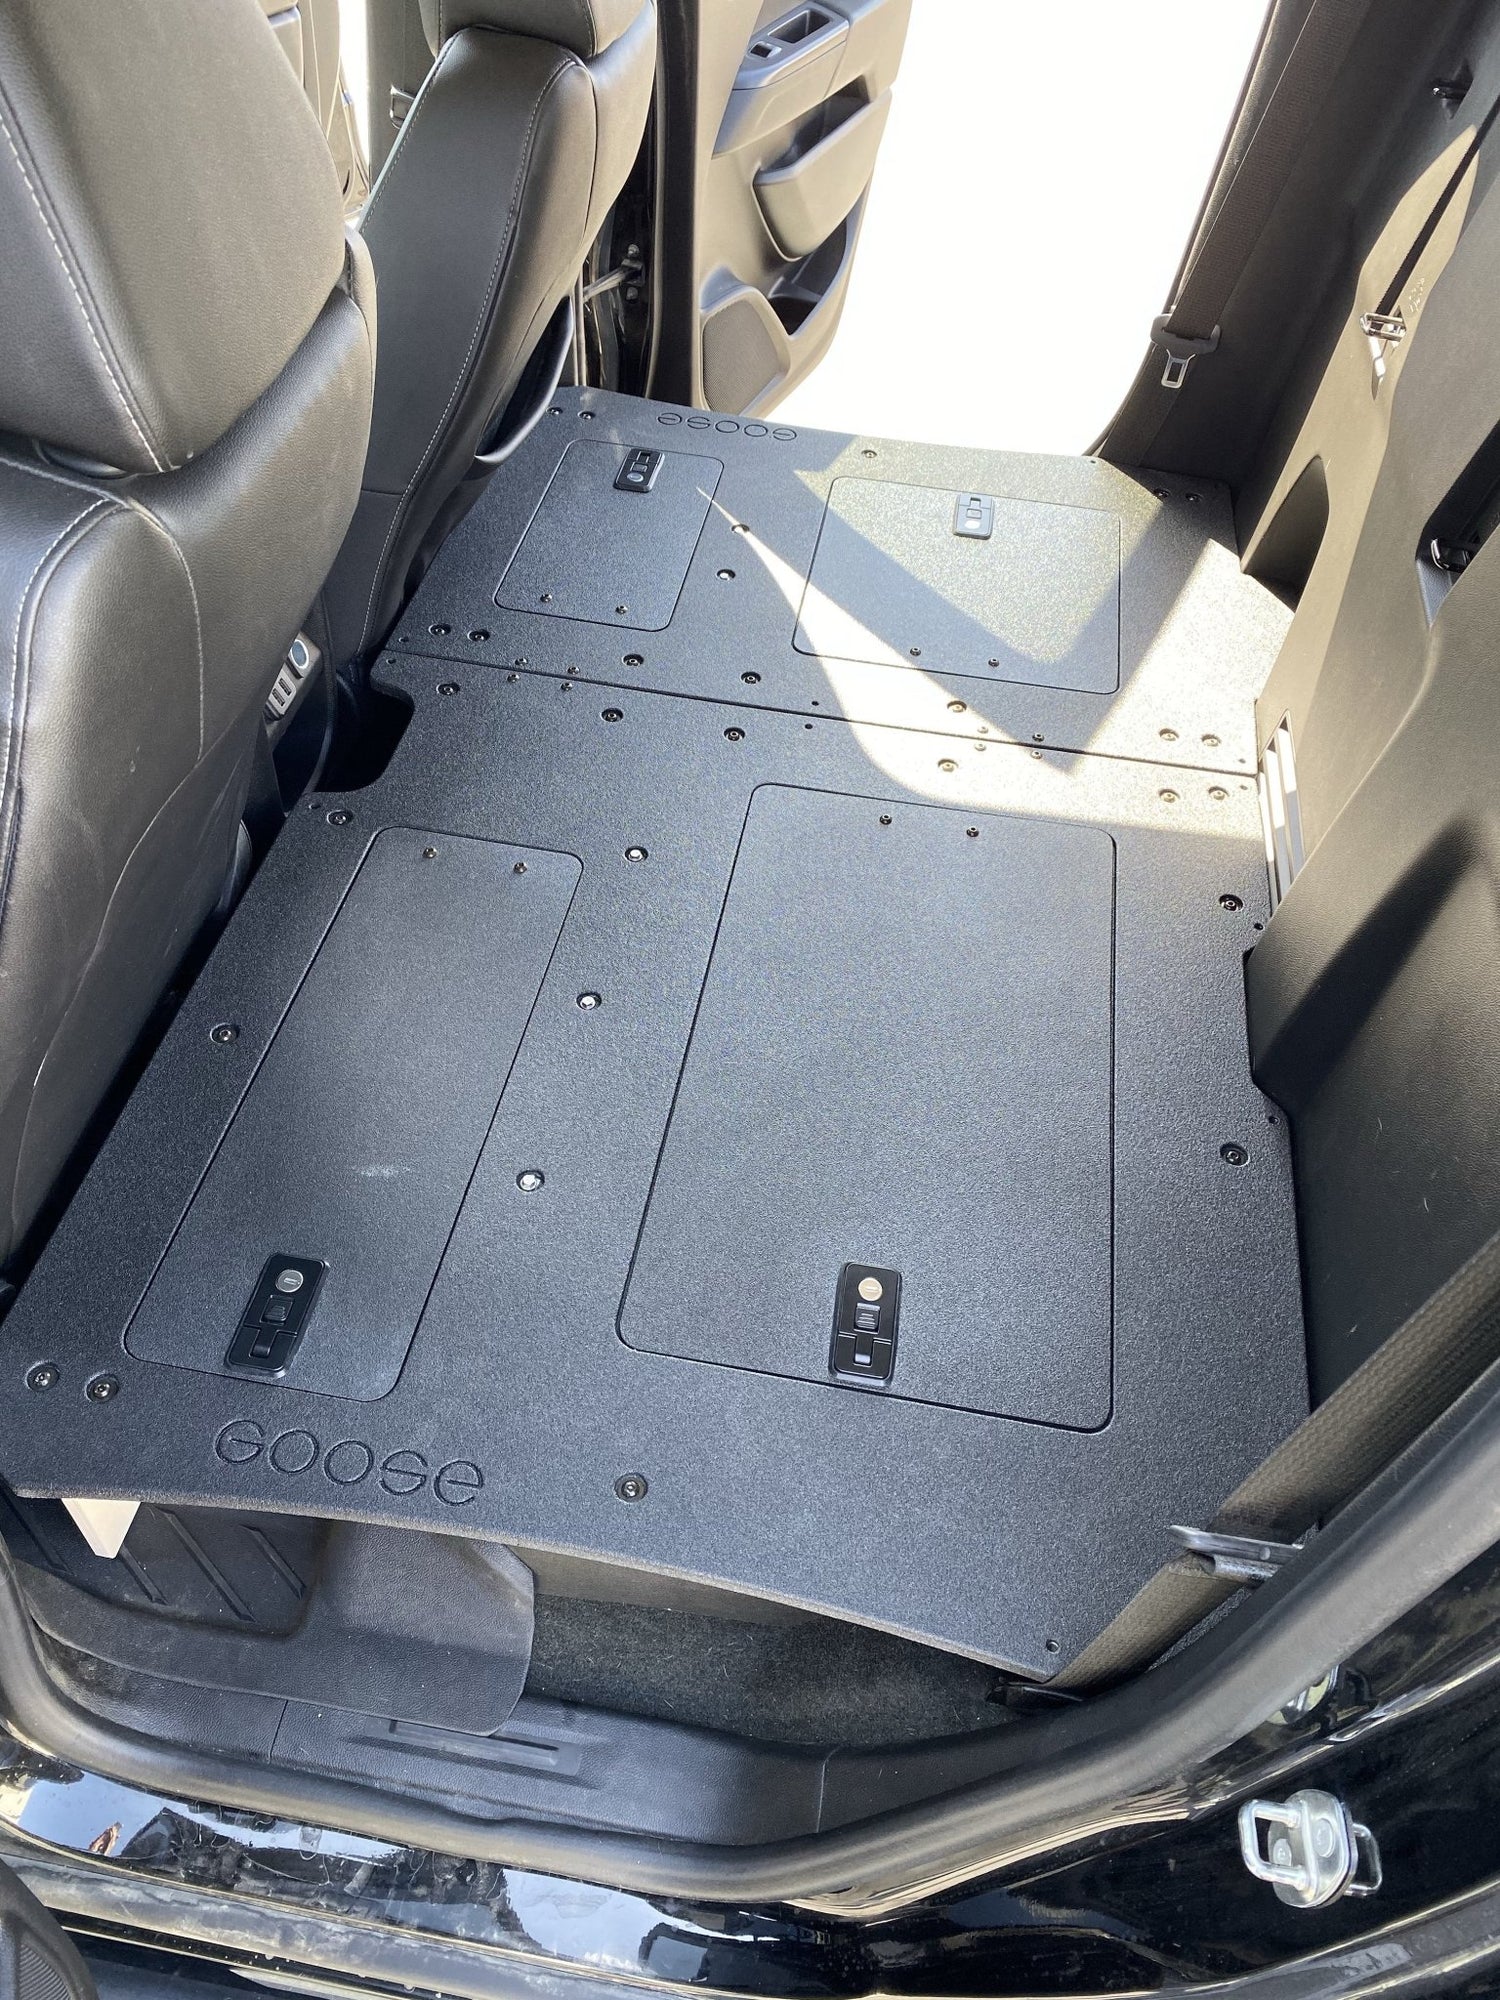 Chevy Colorado & AEV Bison Rear Seat Deletes are here! - Goose Gear